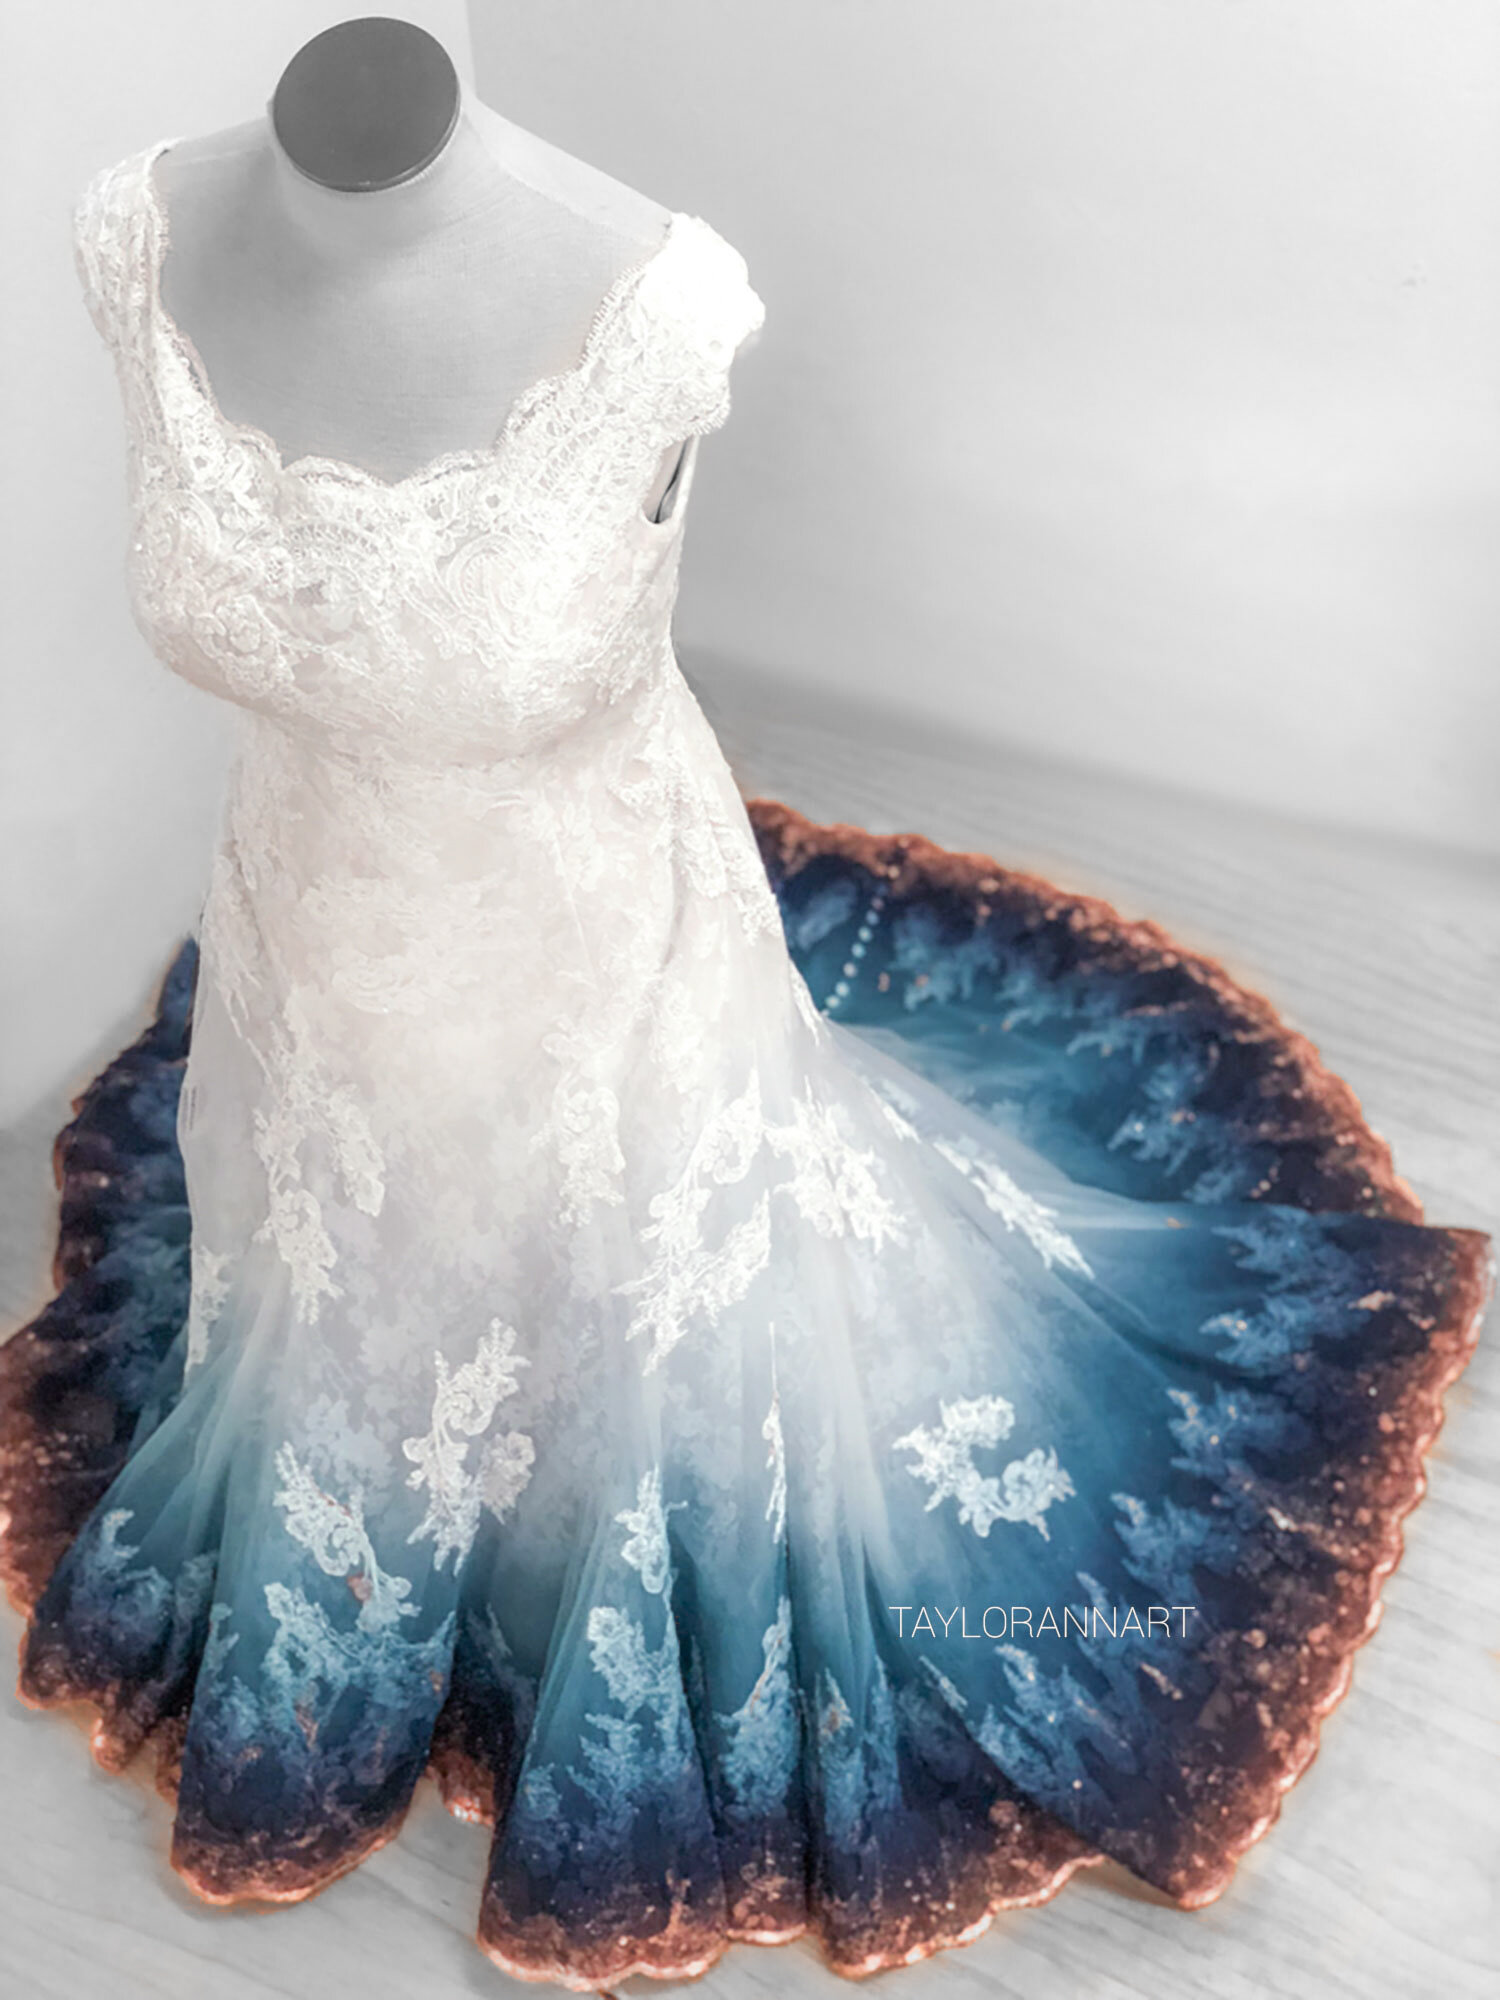 teal ombre wedding dress